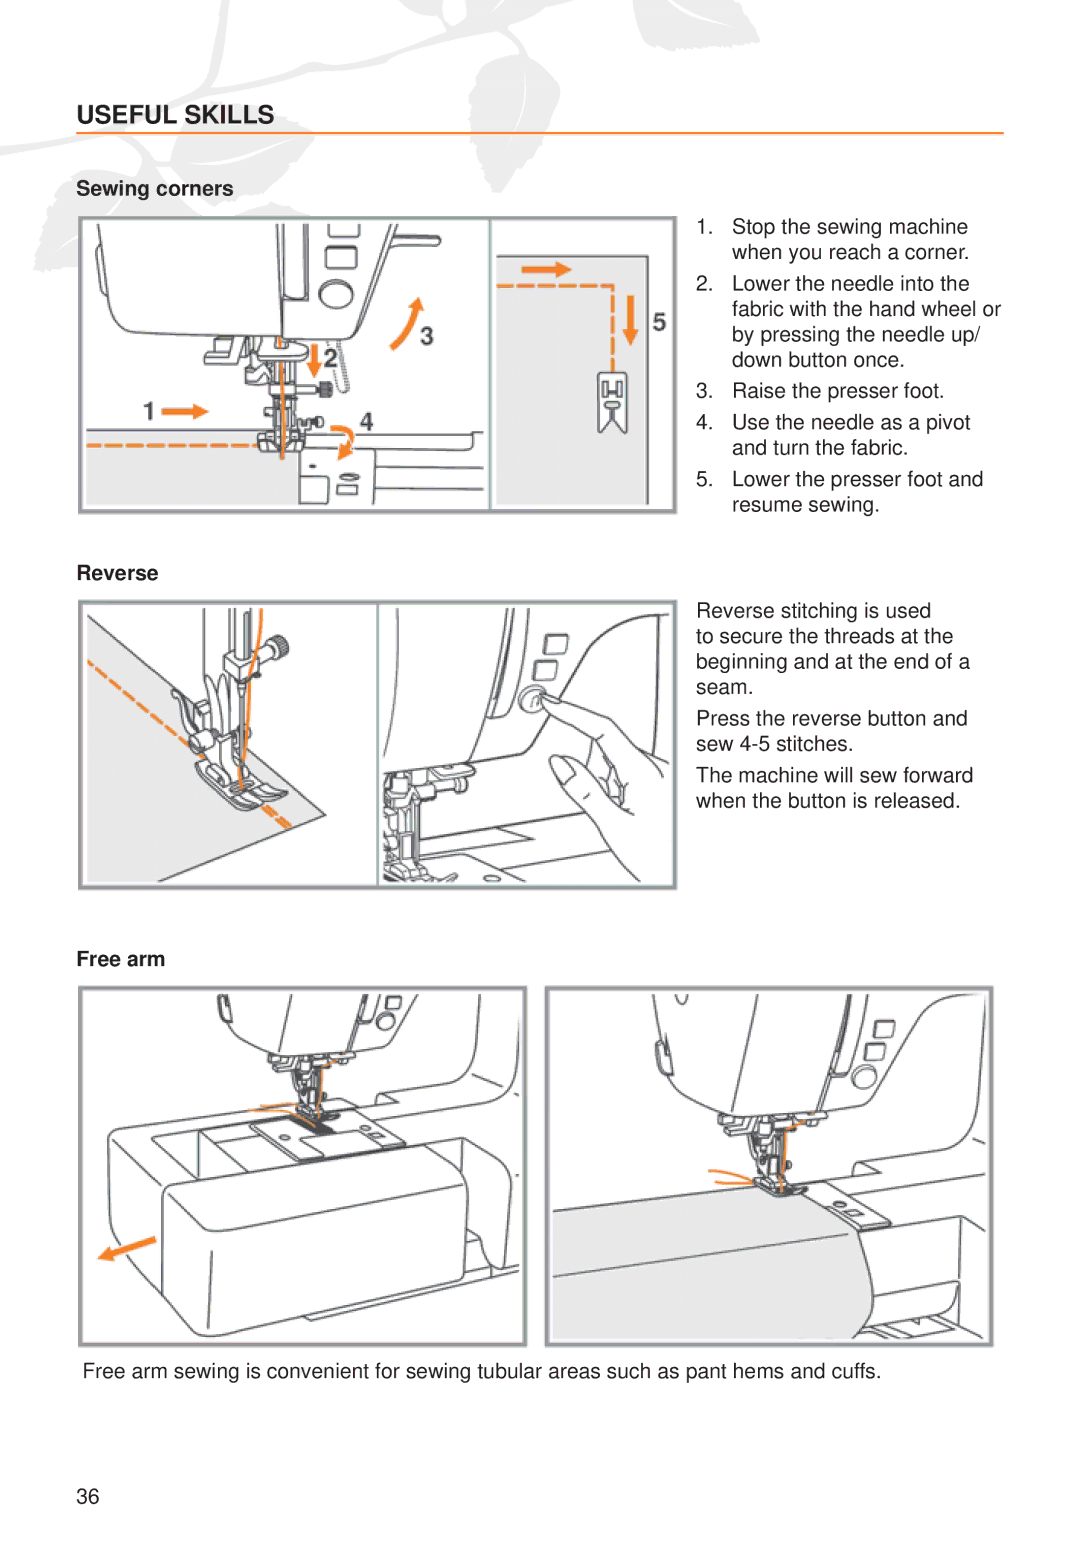 Husqvarna C20, C10 manual Useful Skills, Sewing corners, Reverse, Free arm 